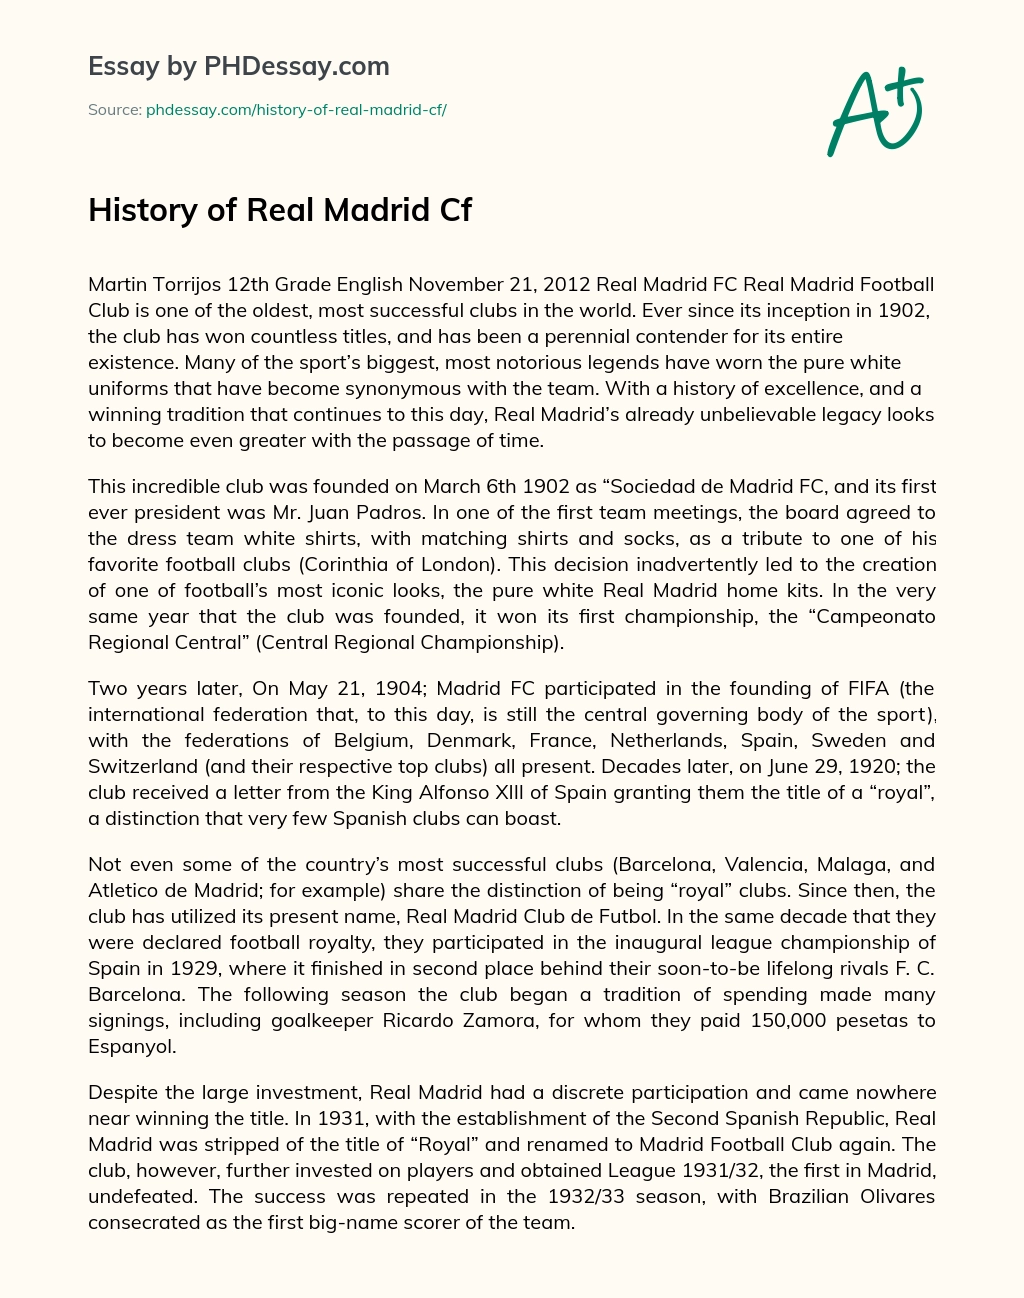 History of Real Madrid Cf essay